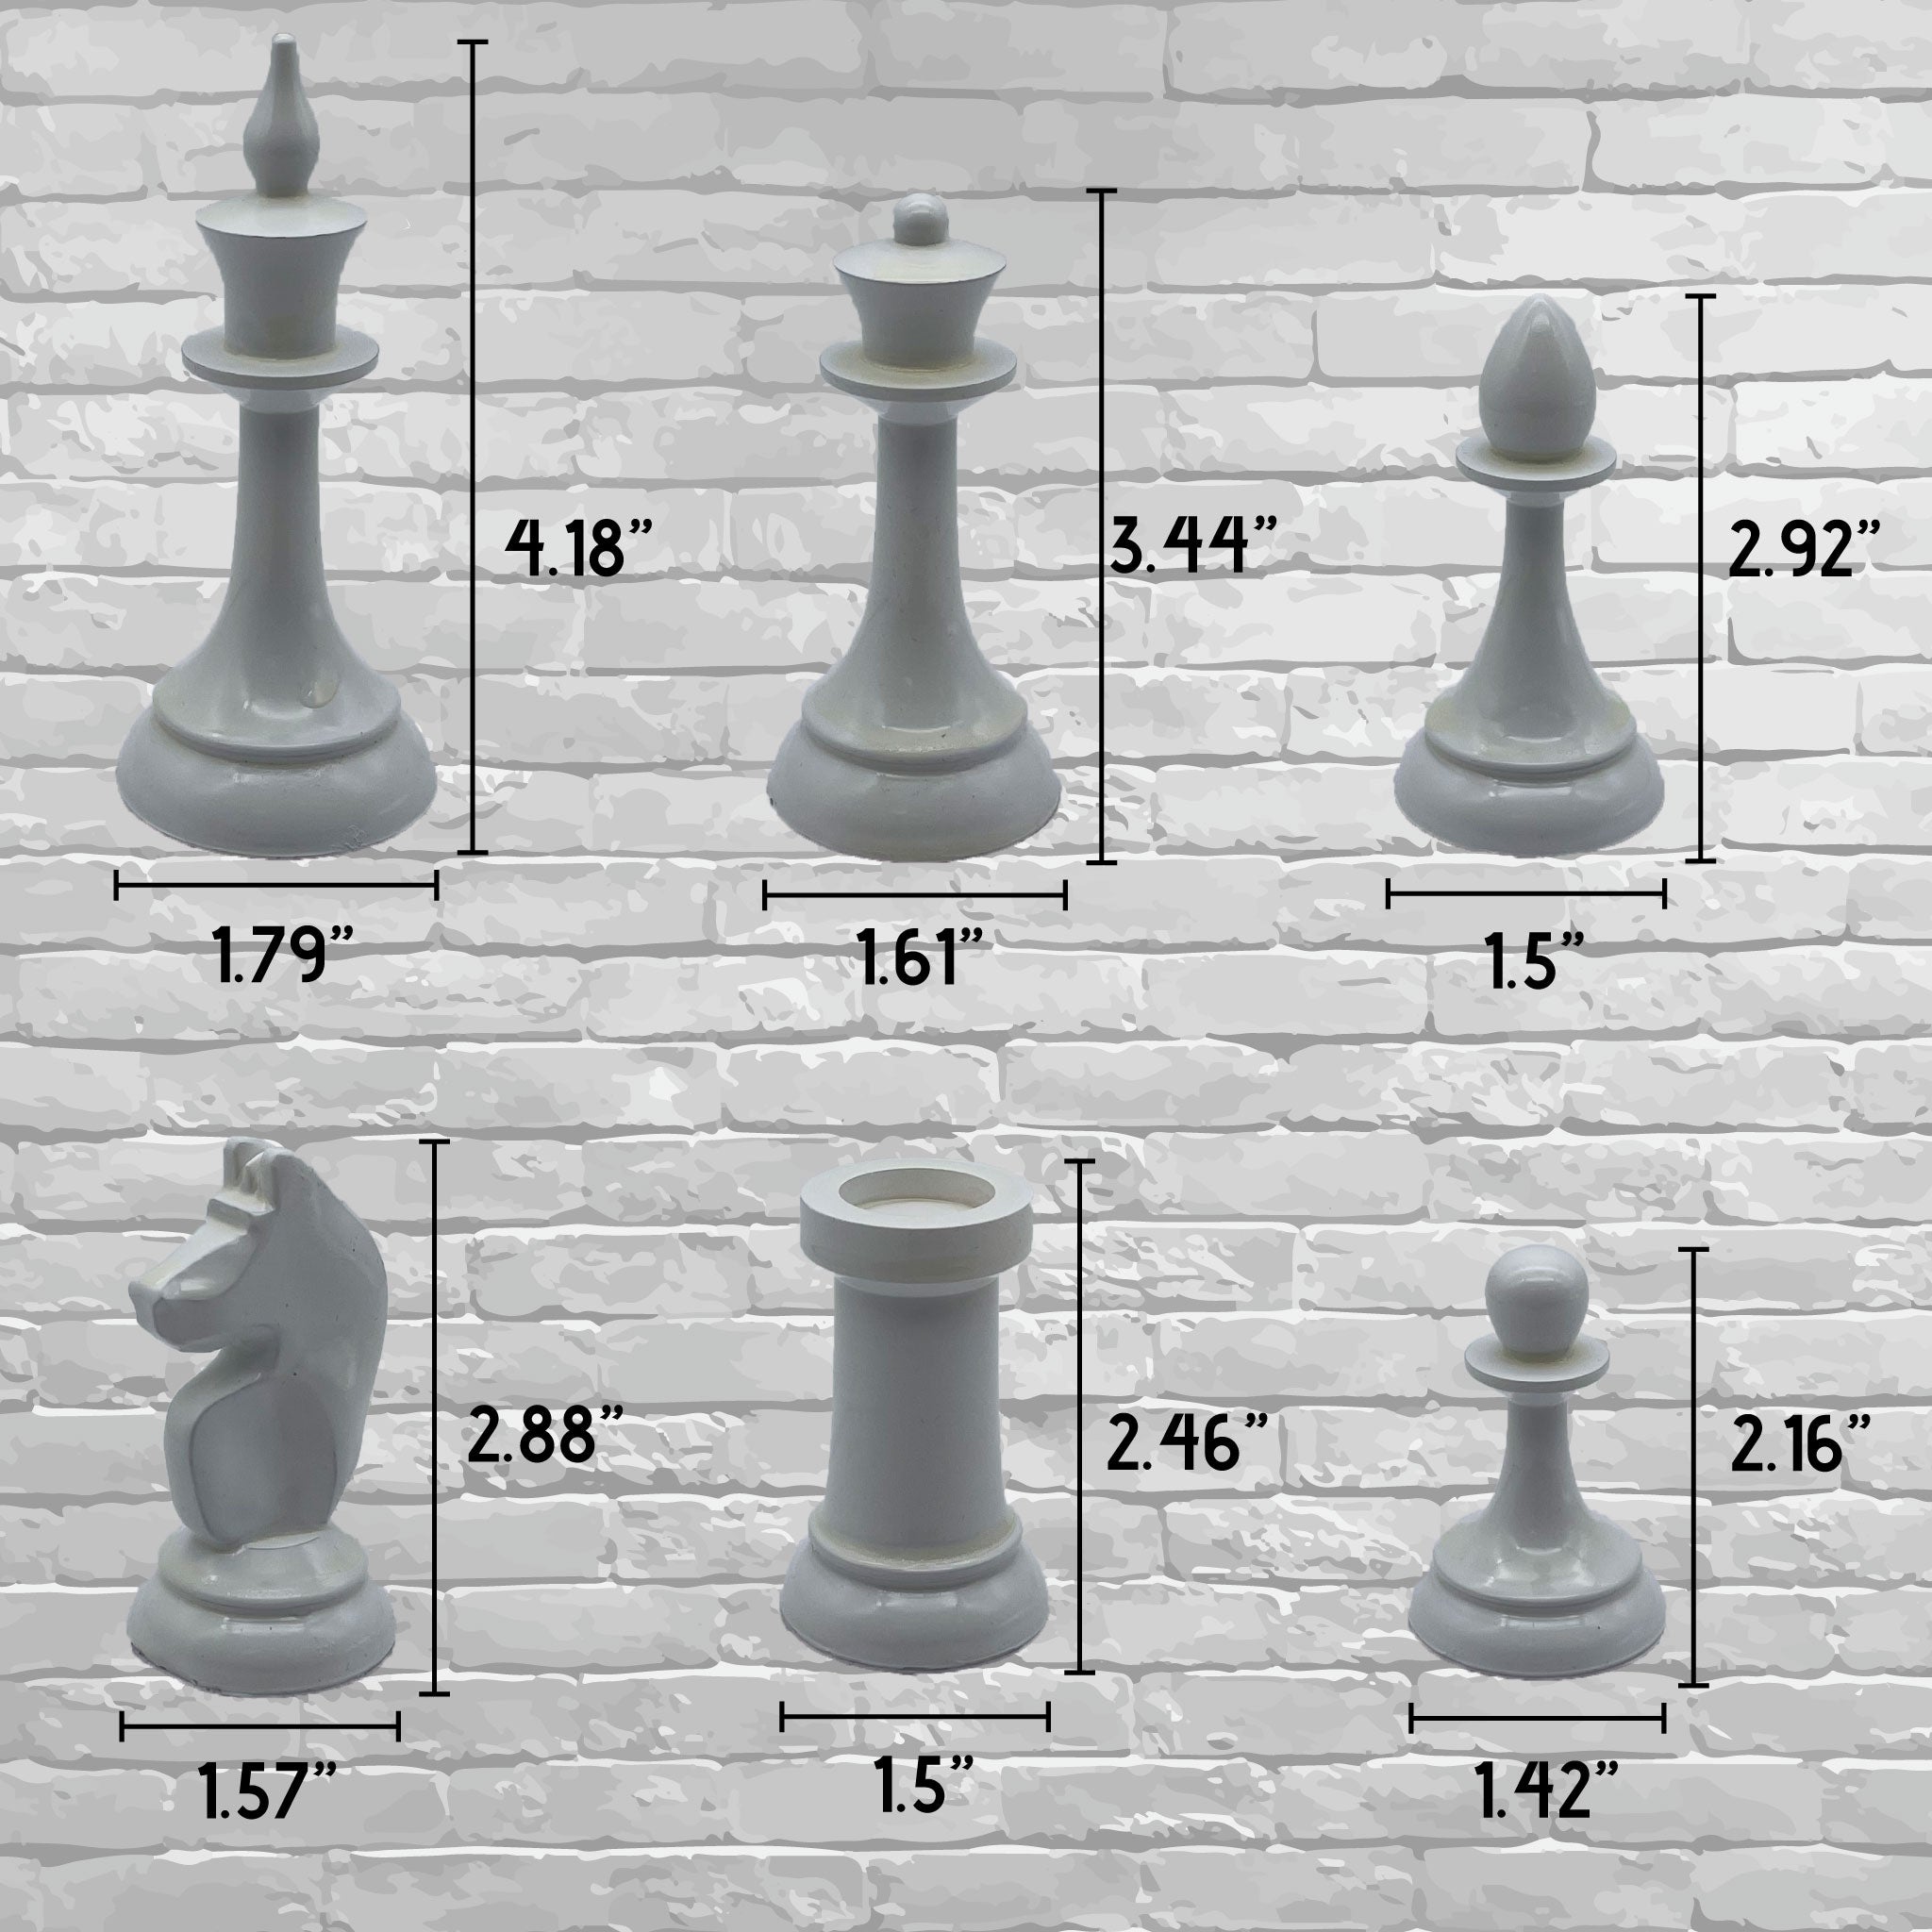 Latvian 3D Printed Chess Set